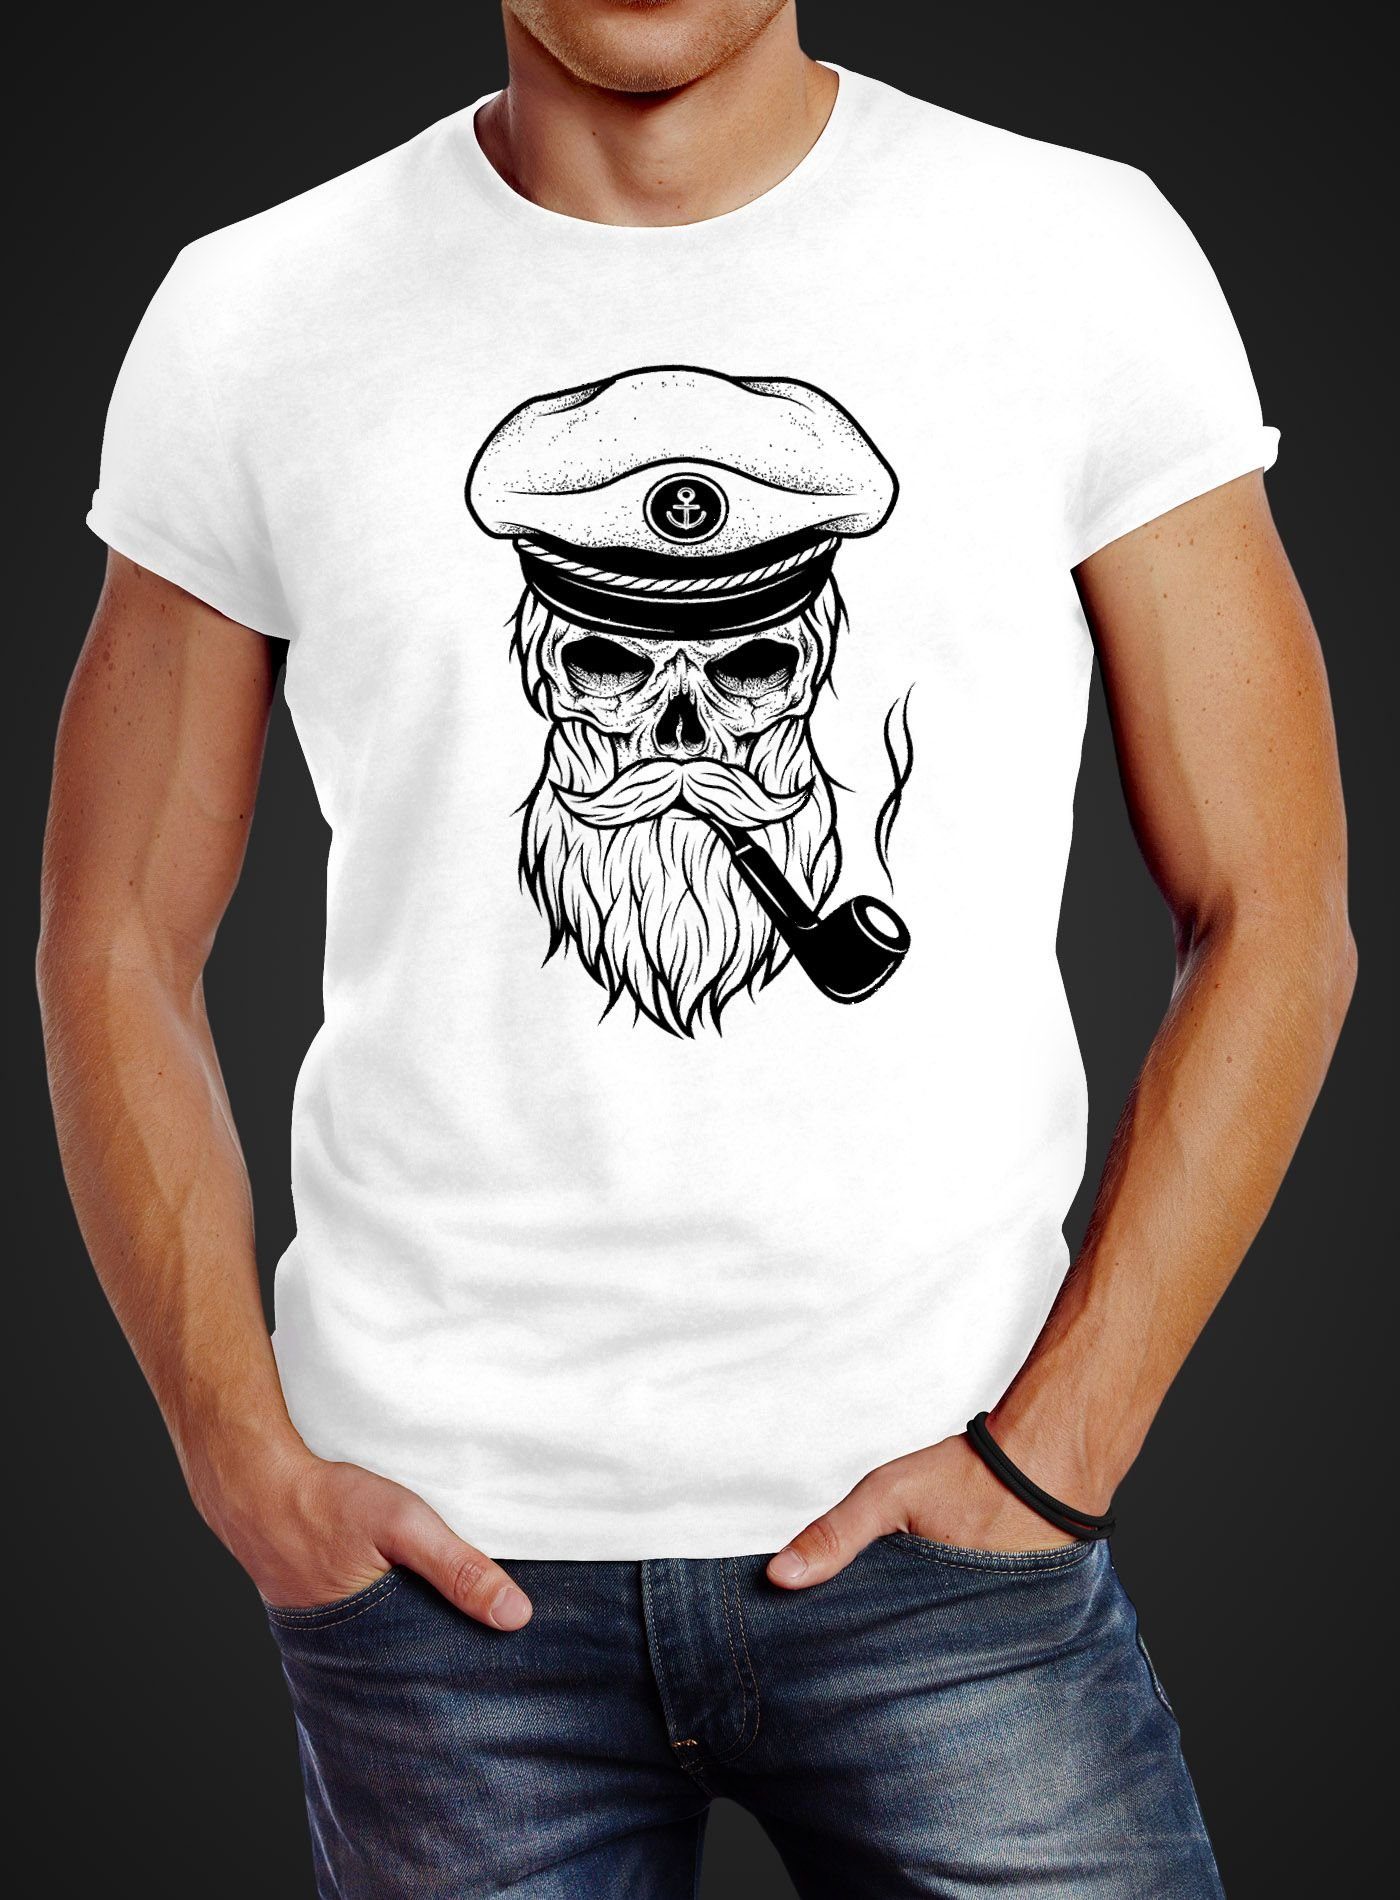 Fit Captain Neverless® Herren Slim Print-Shirt Hipster weiß Skull Print Neverless mit Kapitän T-Shirt Totenkopf